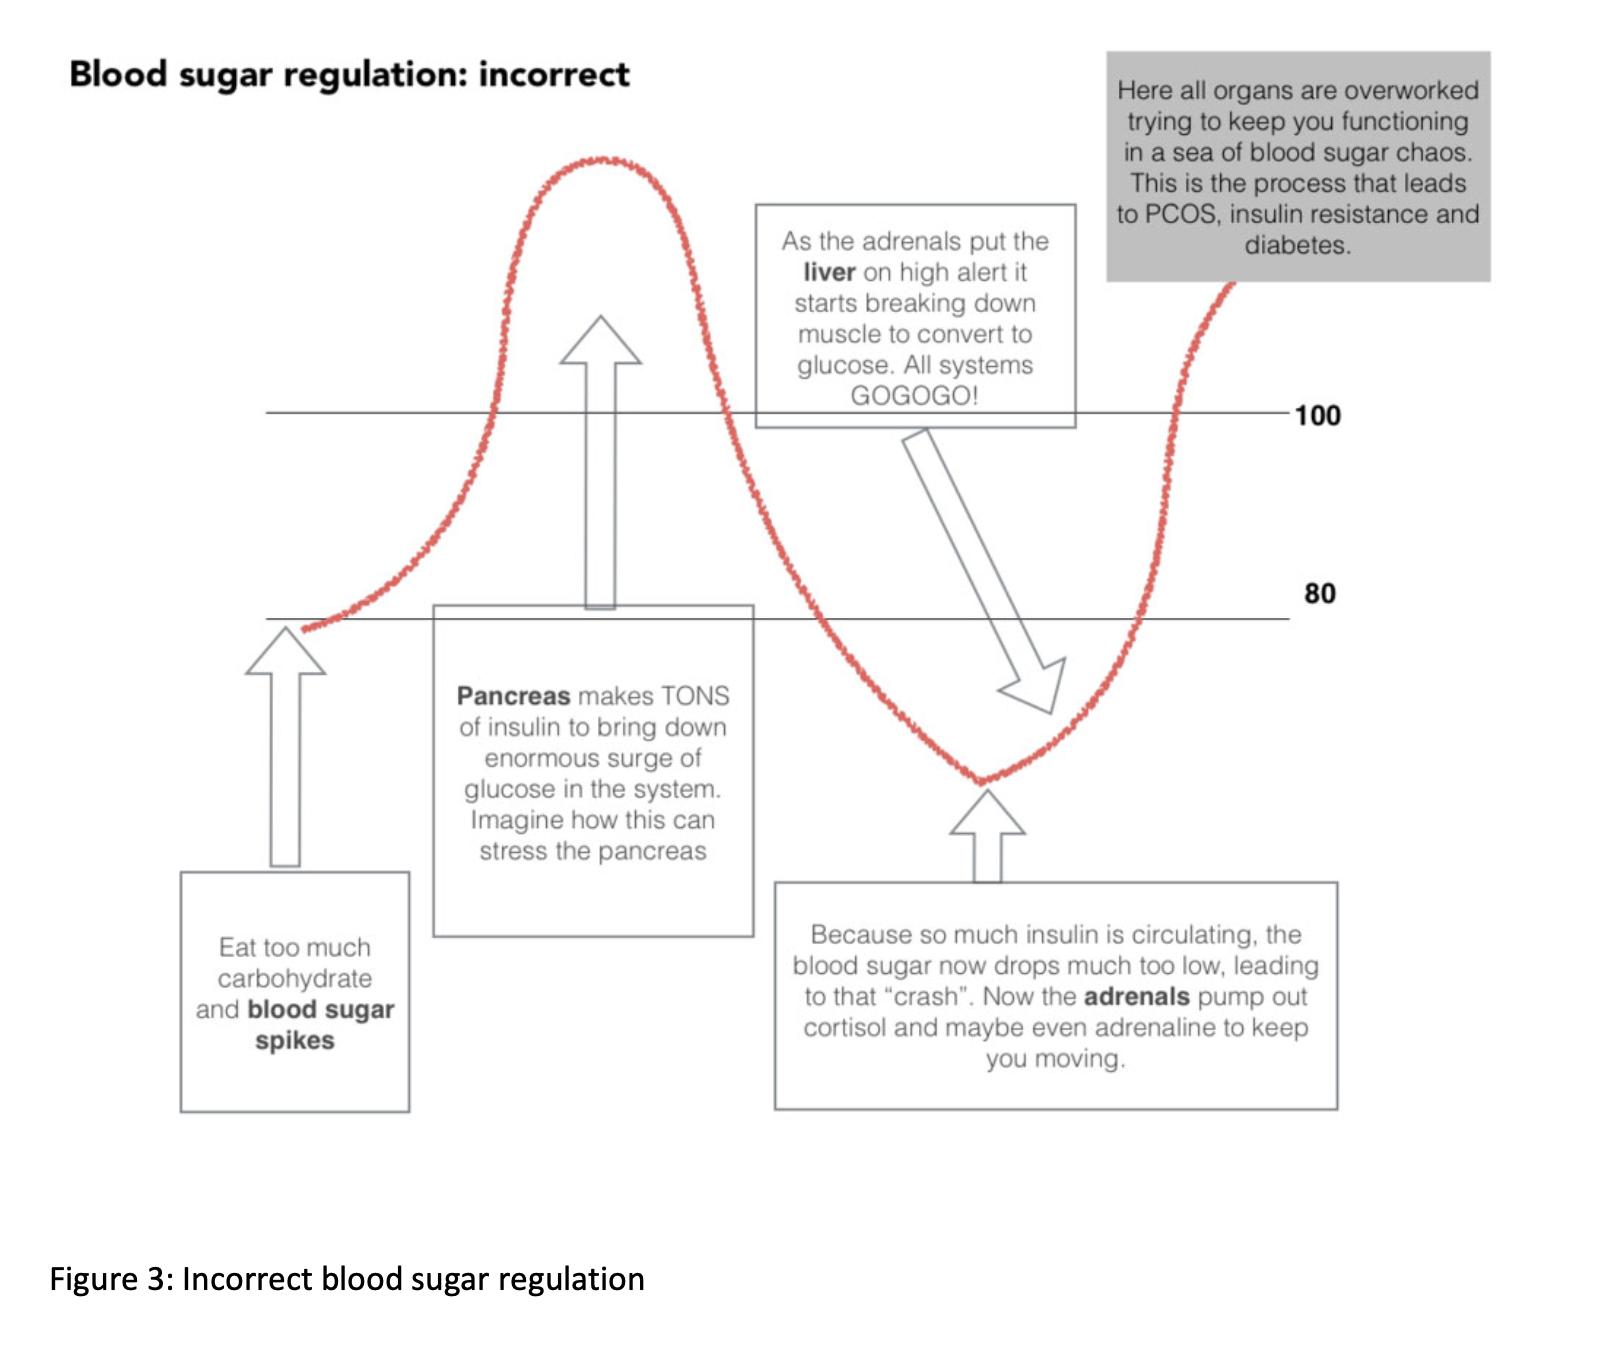 Incorrect blood sugar regulation